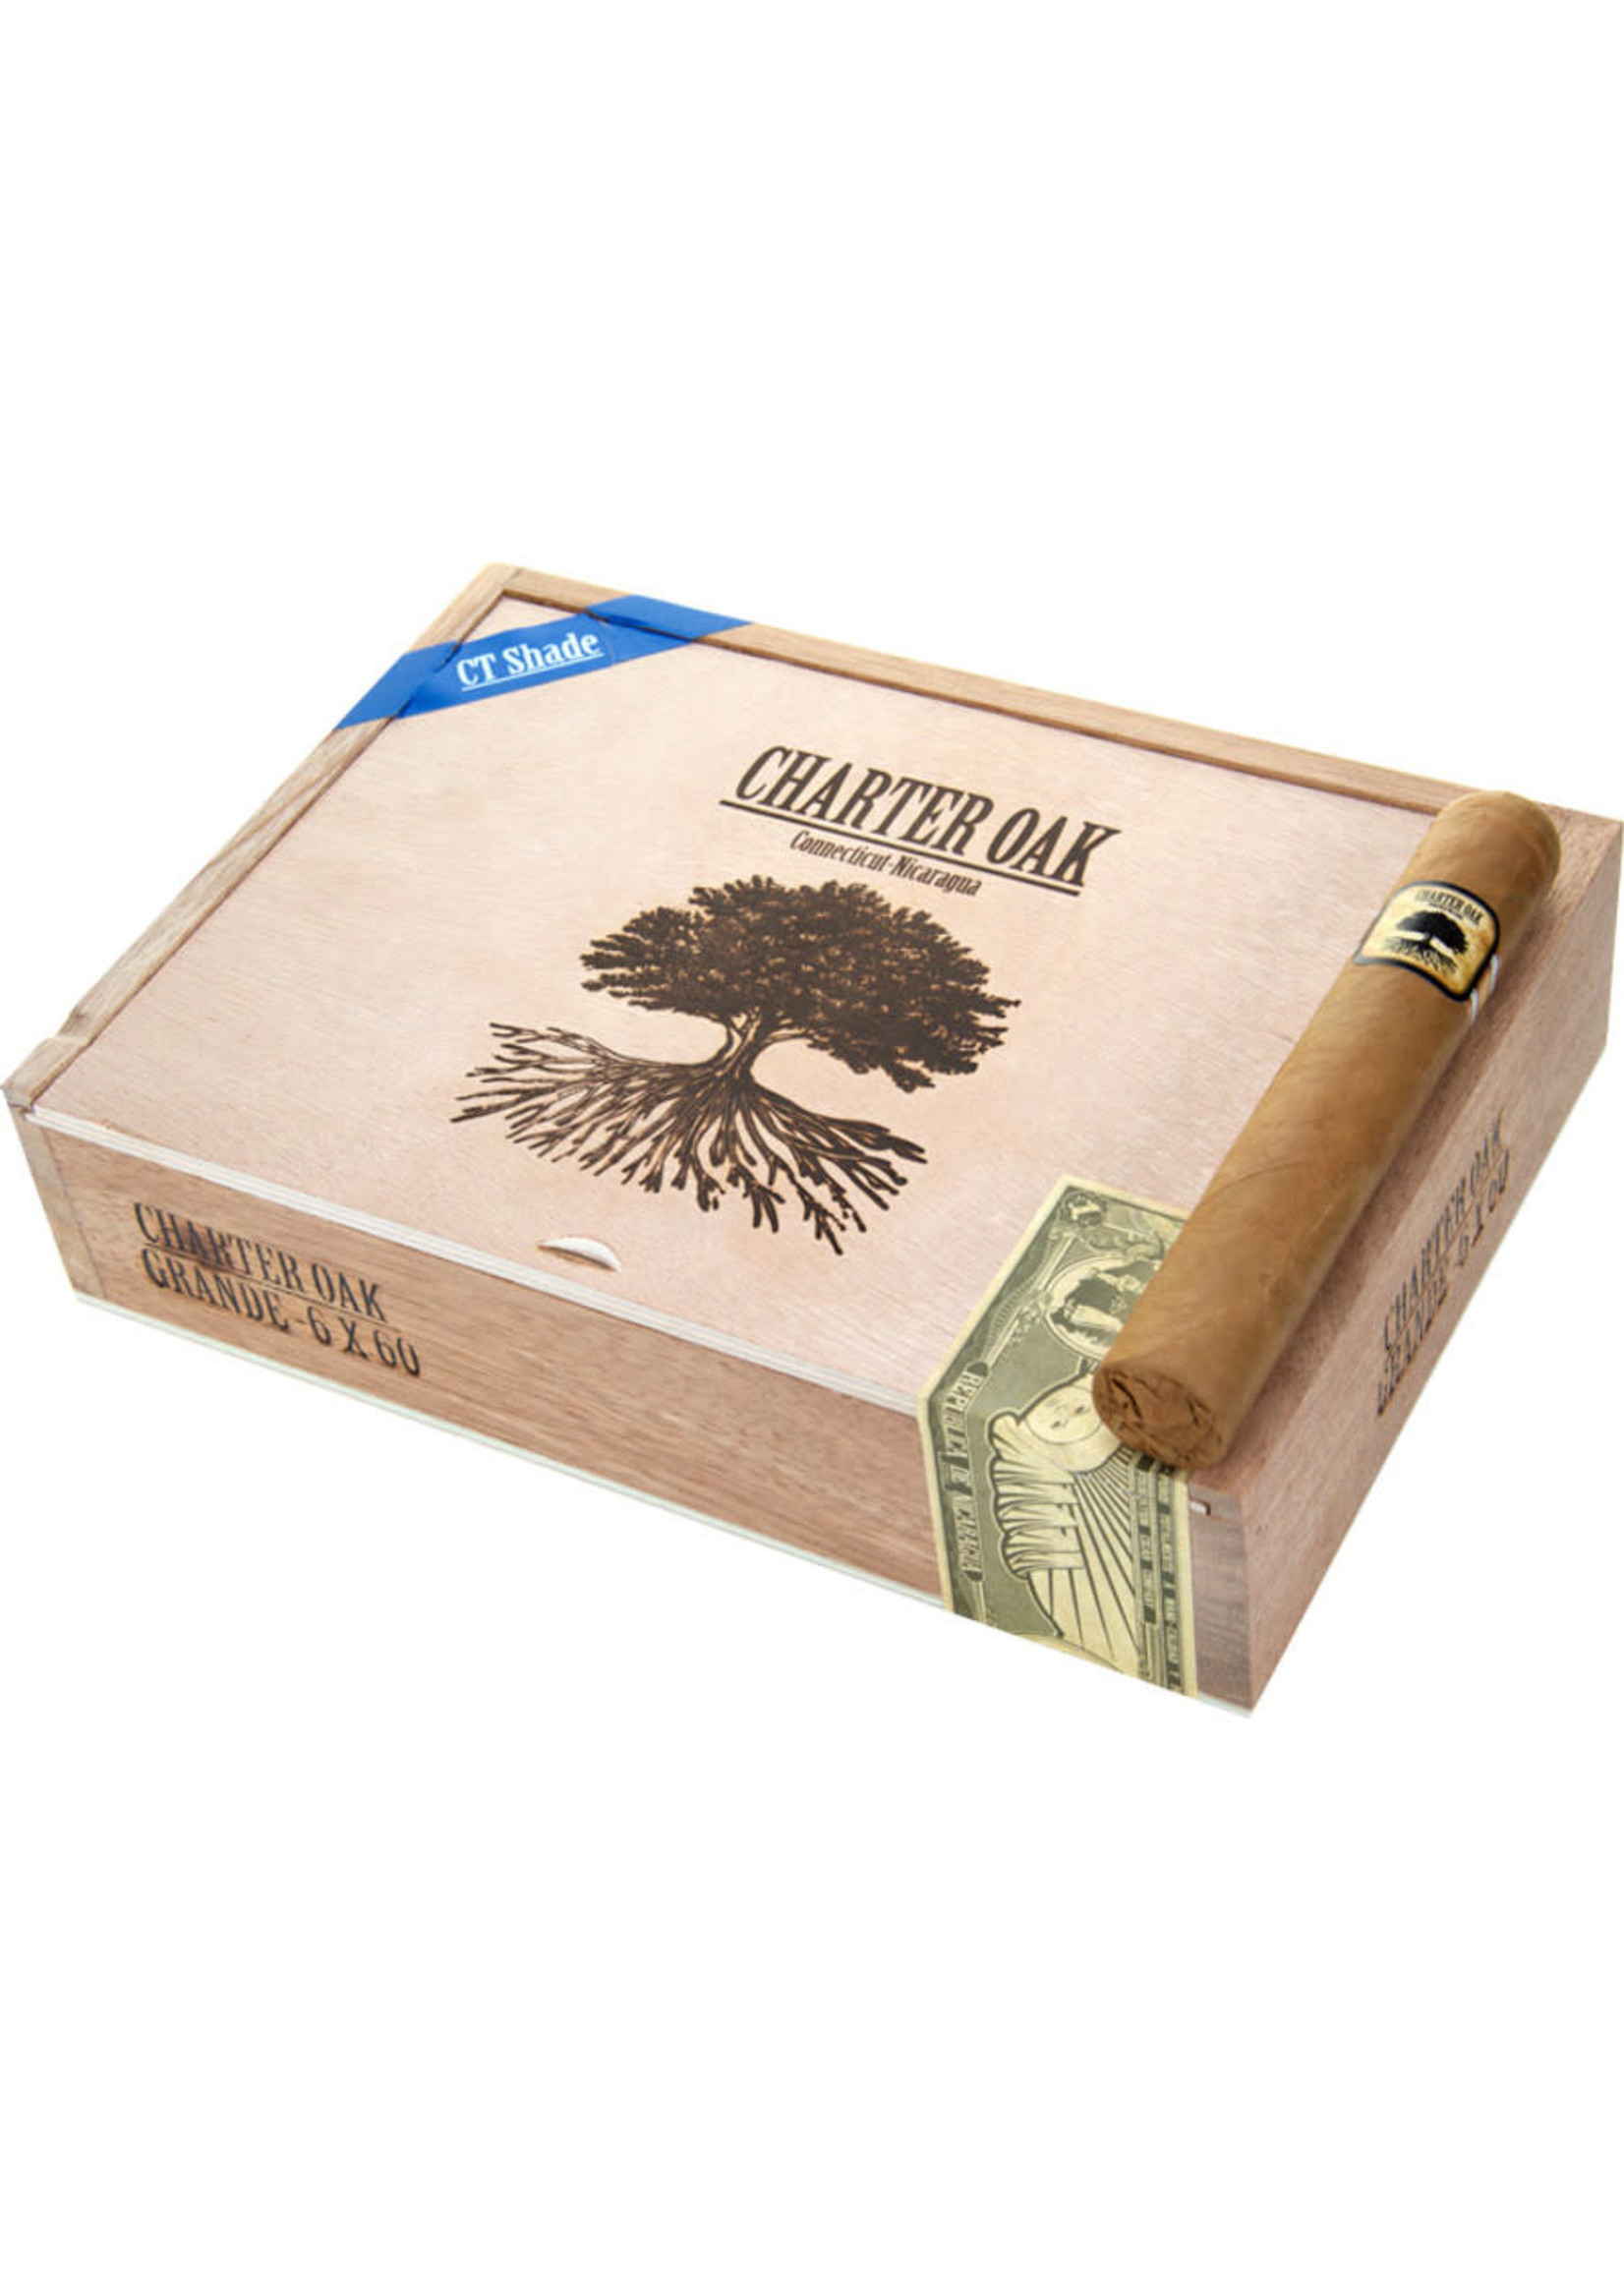 Foundation Cigars Foundation Charter Oak Shade - Grande - 6x60